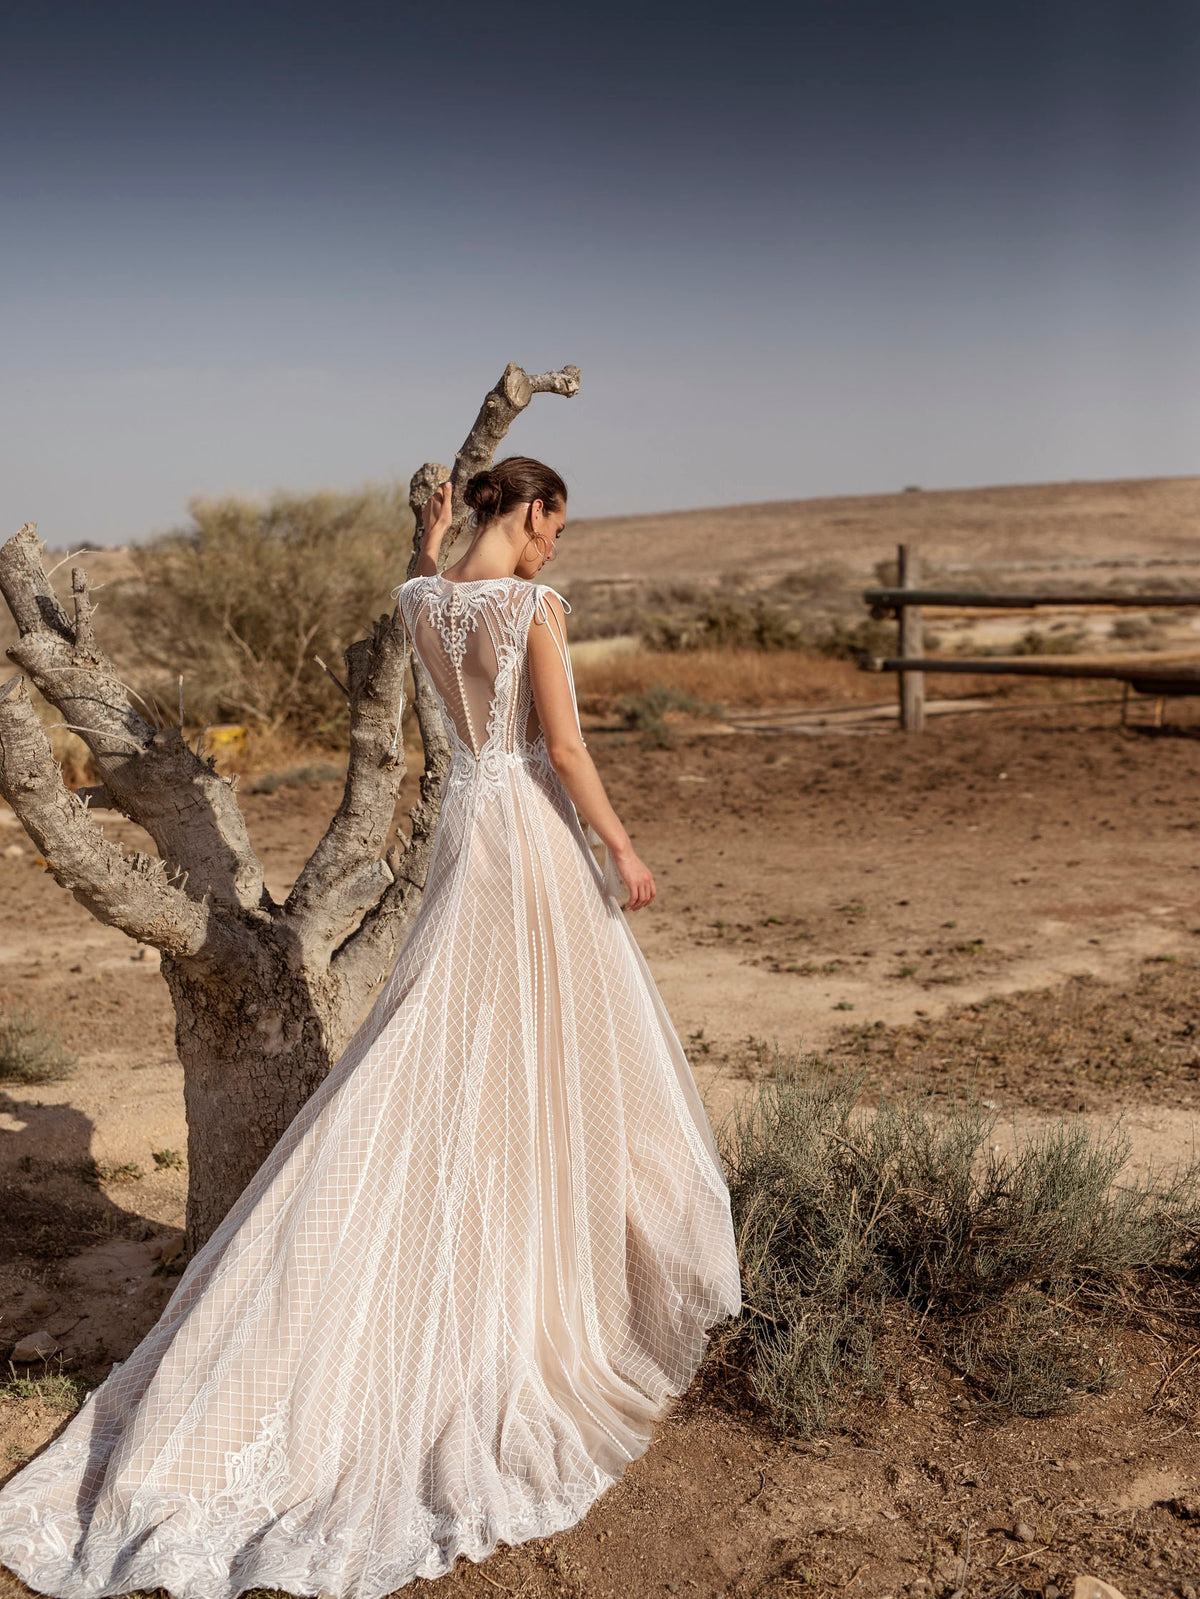 Boho ALine Ivory Lace Wedding Dress Tassel Sheer Illusion Bodice Sleeveless High Neckline Wedding Dress Buttons boho Style Bridal Gown